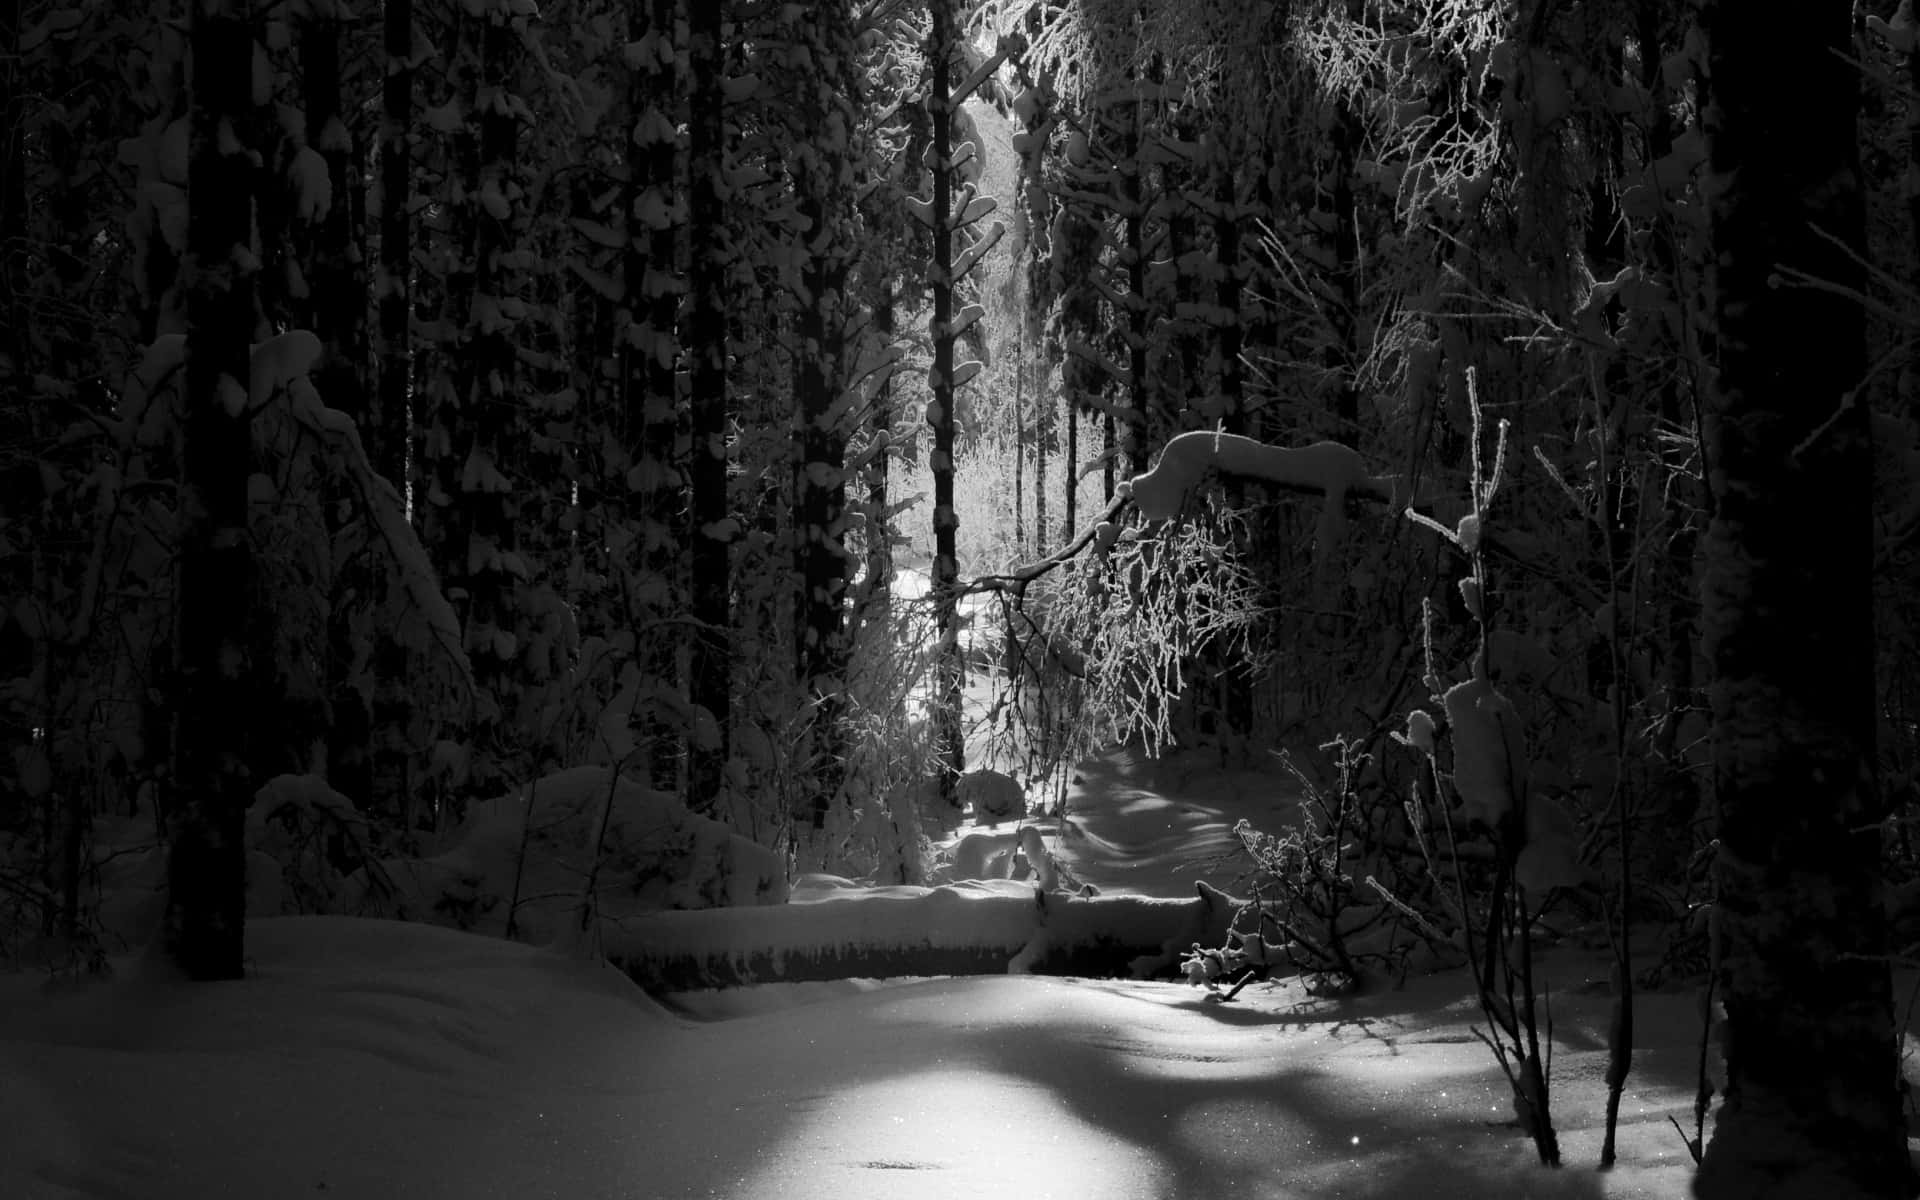 A peaceful winter scene of white snow